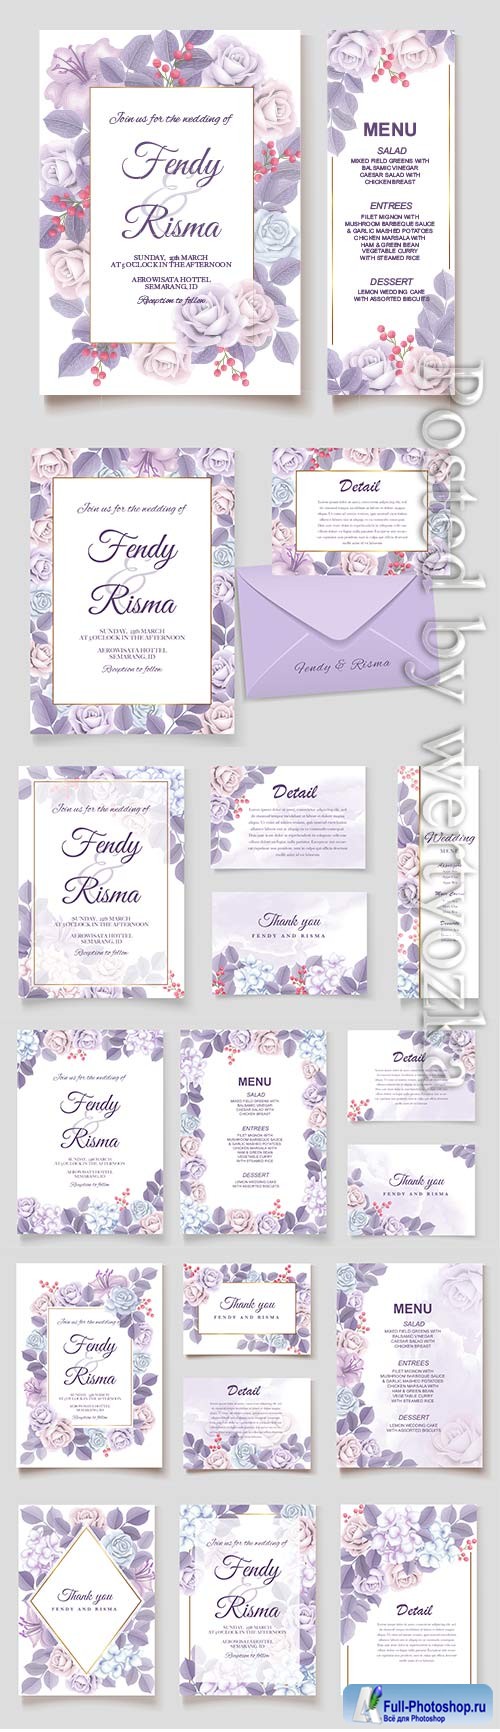 Elegant vector wedding invitation floral design